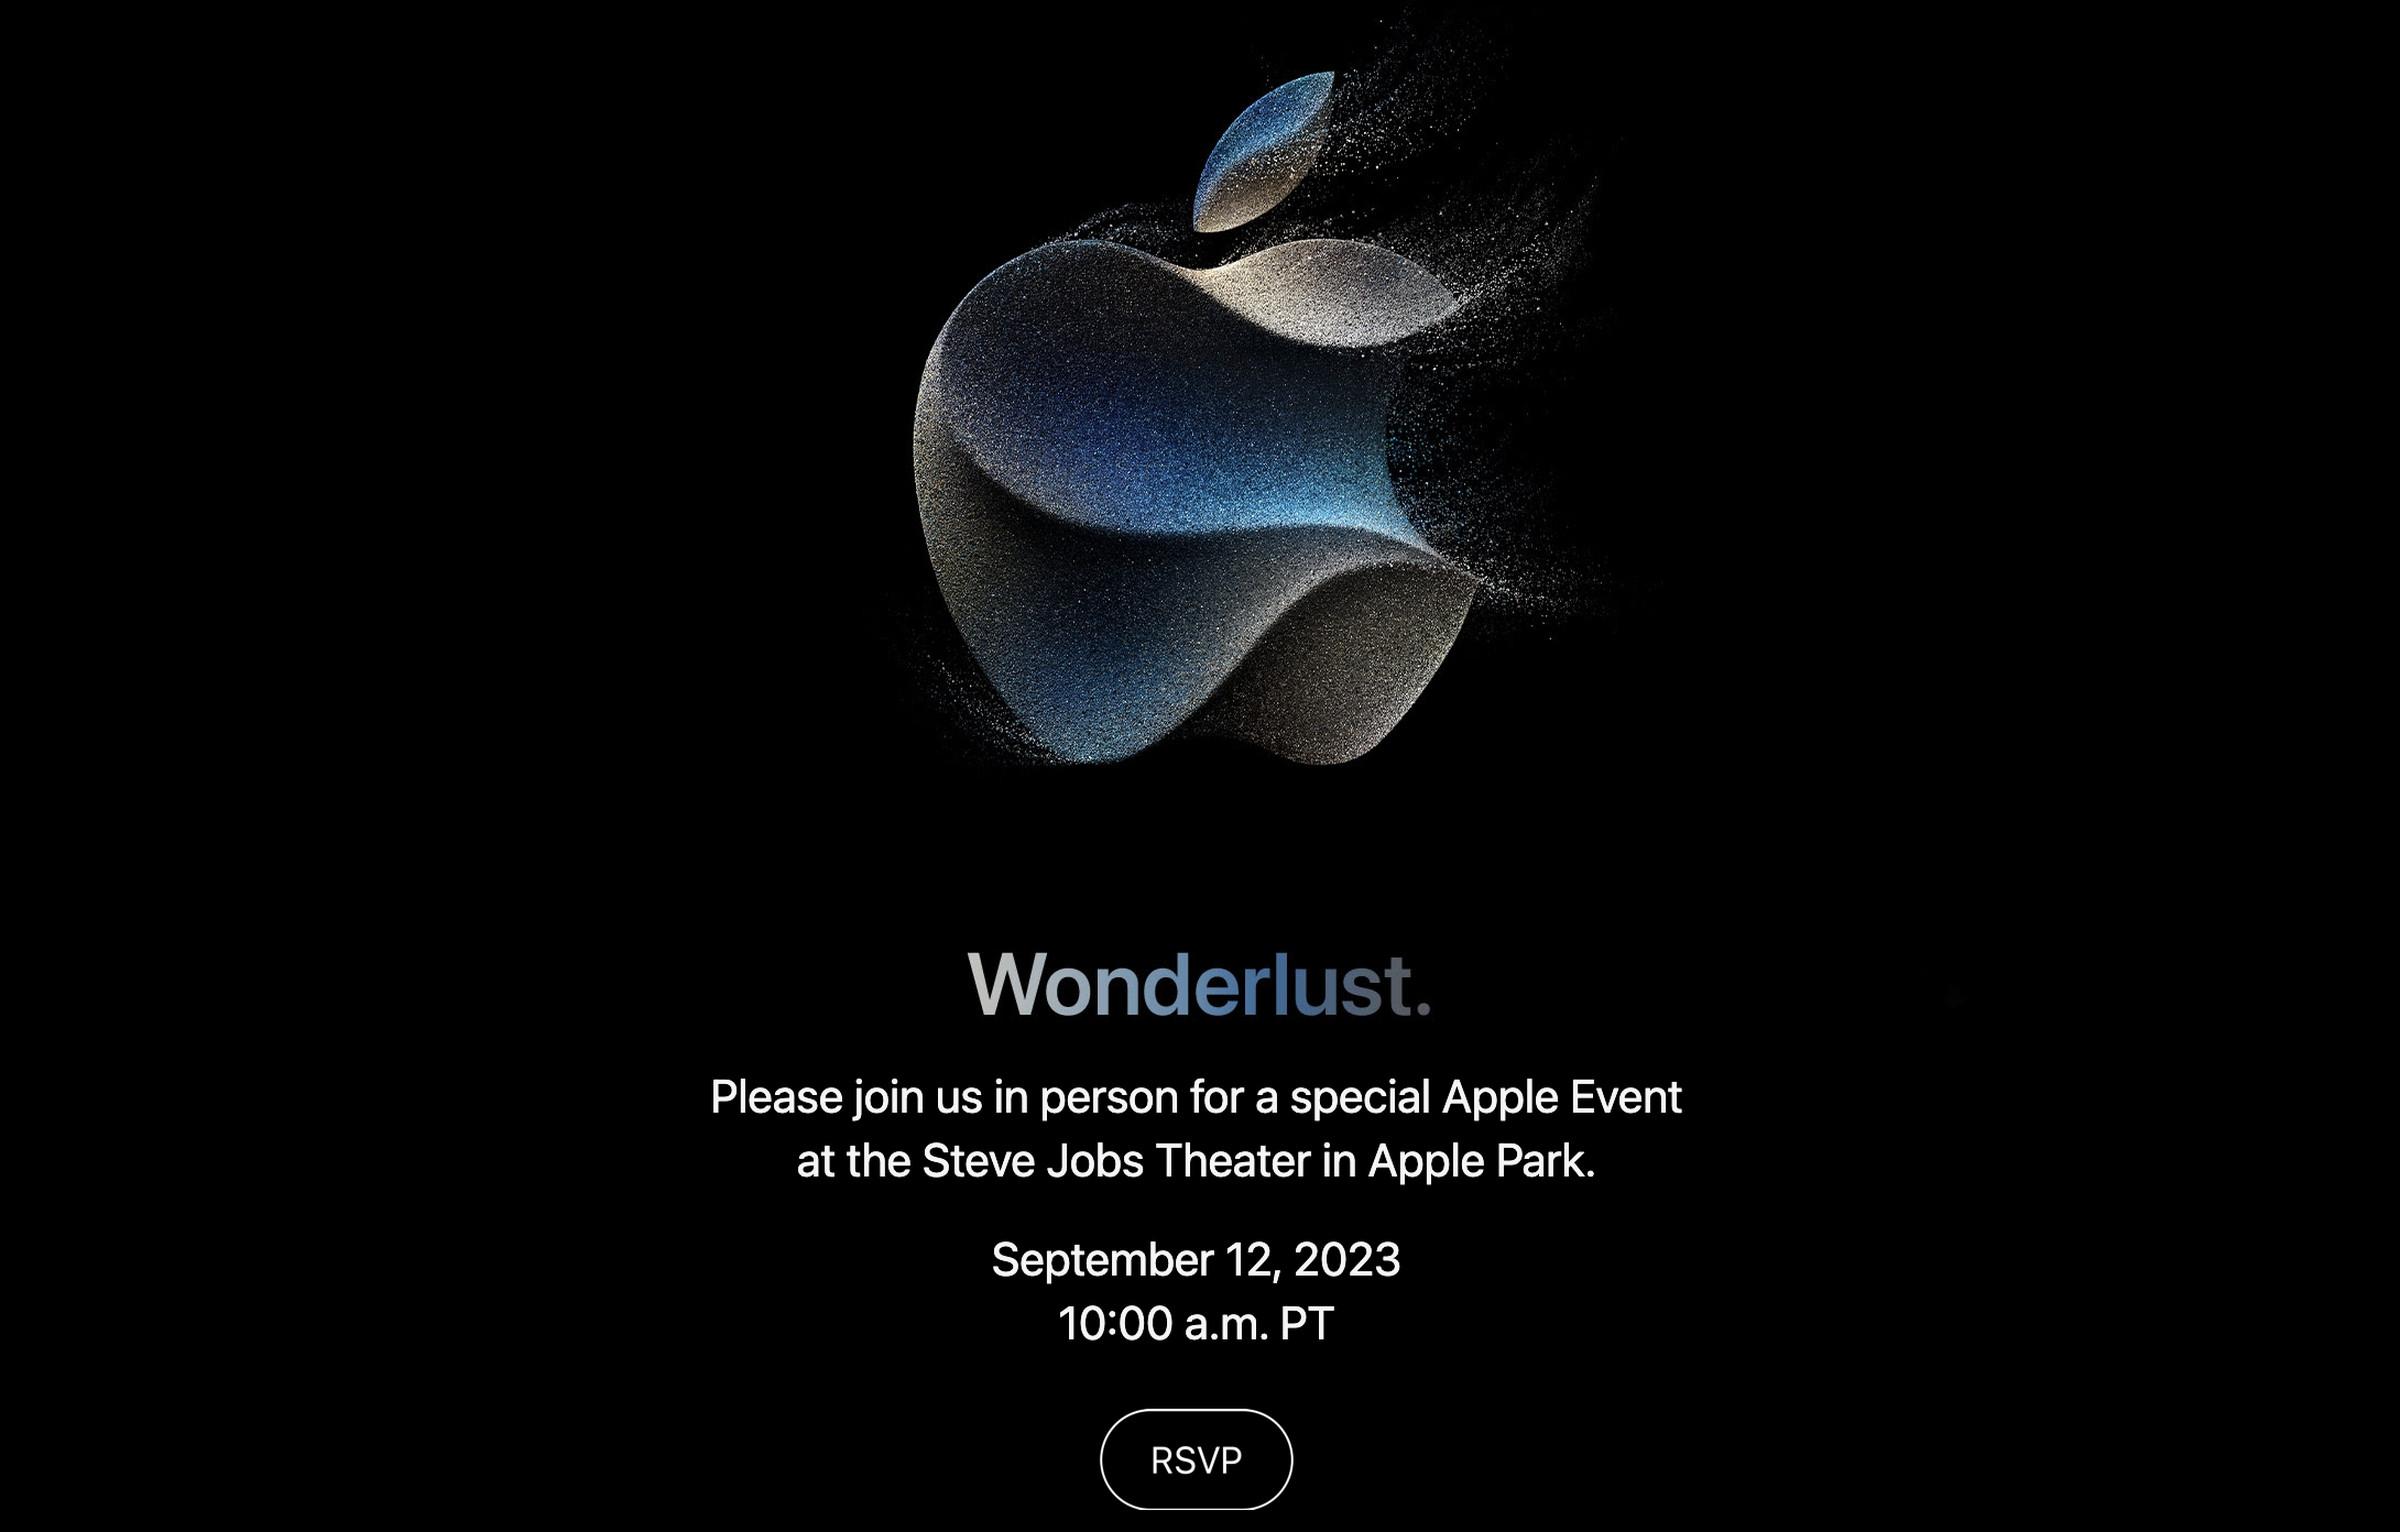 An Apple logo with “Wonderlust” written beneath it.